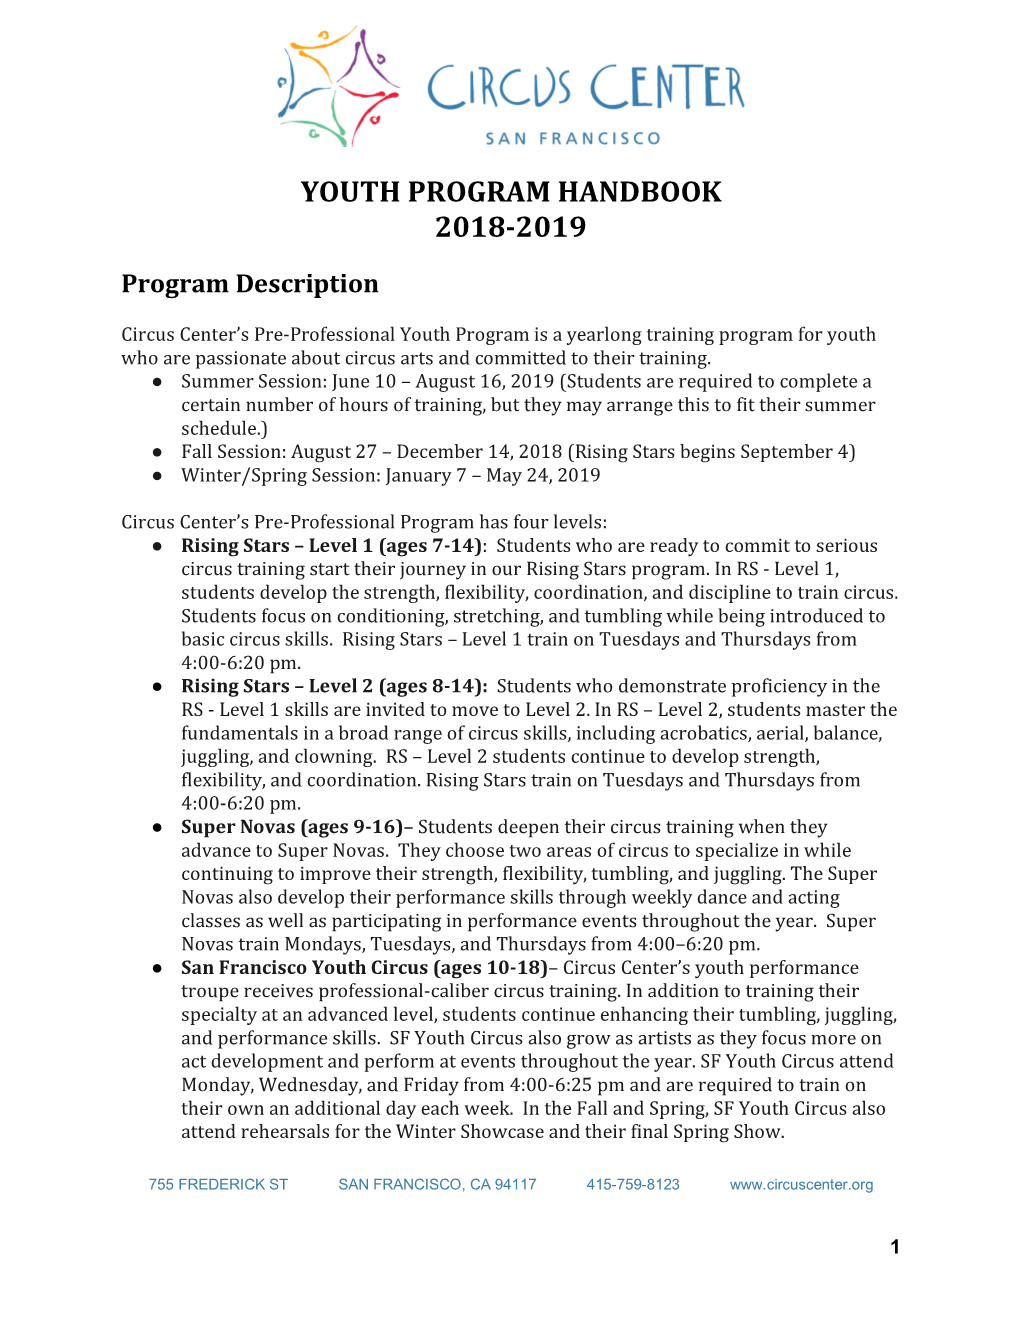 Youth Program Handbook 2018-2019